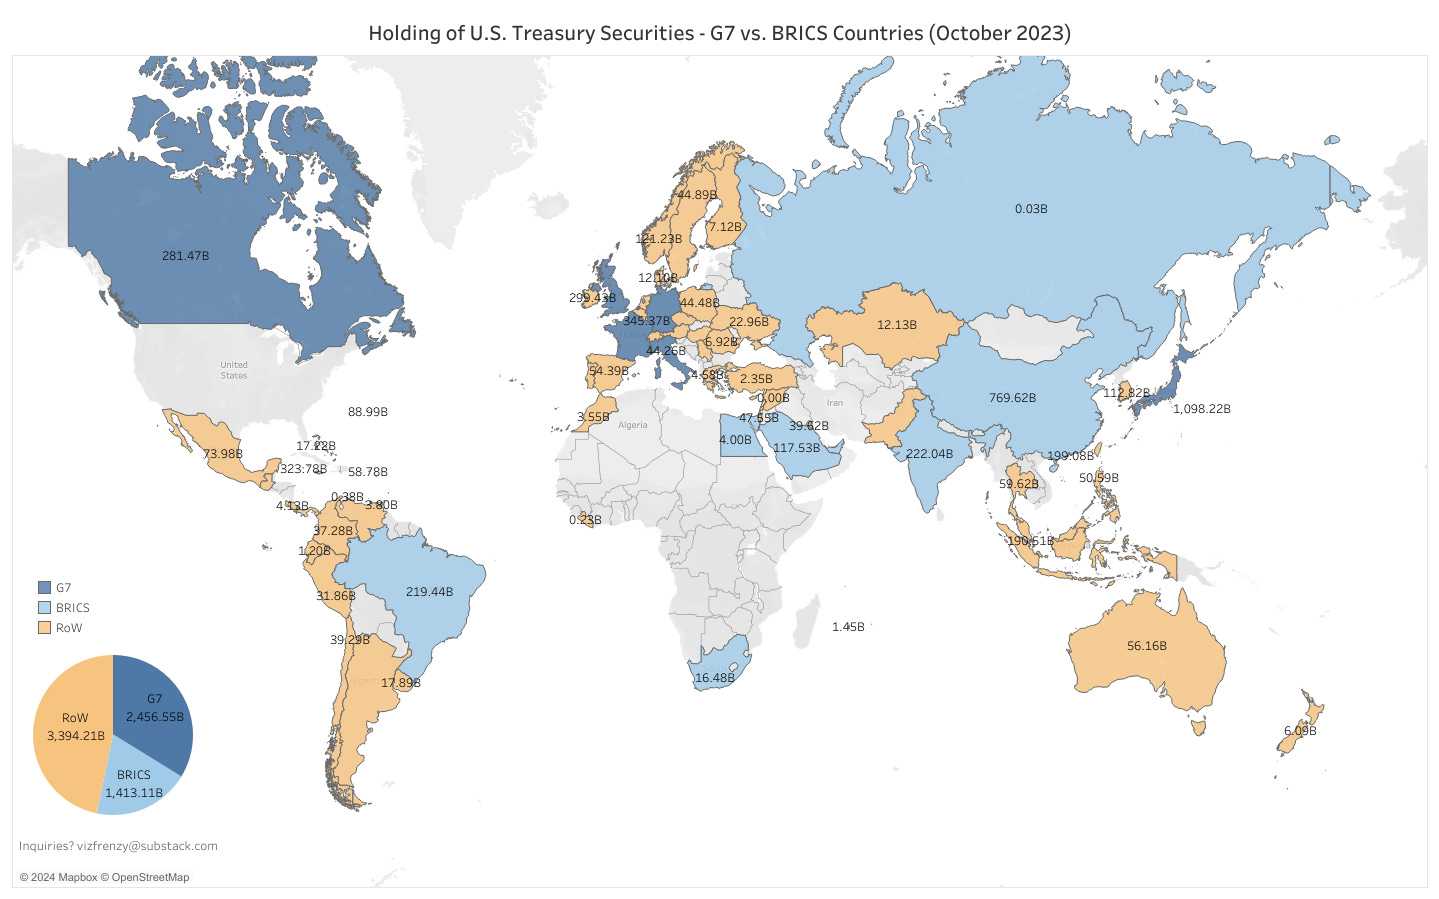 Holding of U.S. Treasury Securities - G7 vs. BRICS Countries (October 2023)